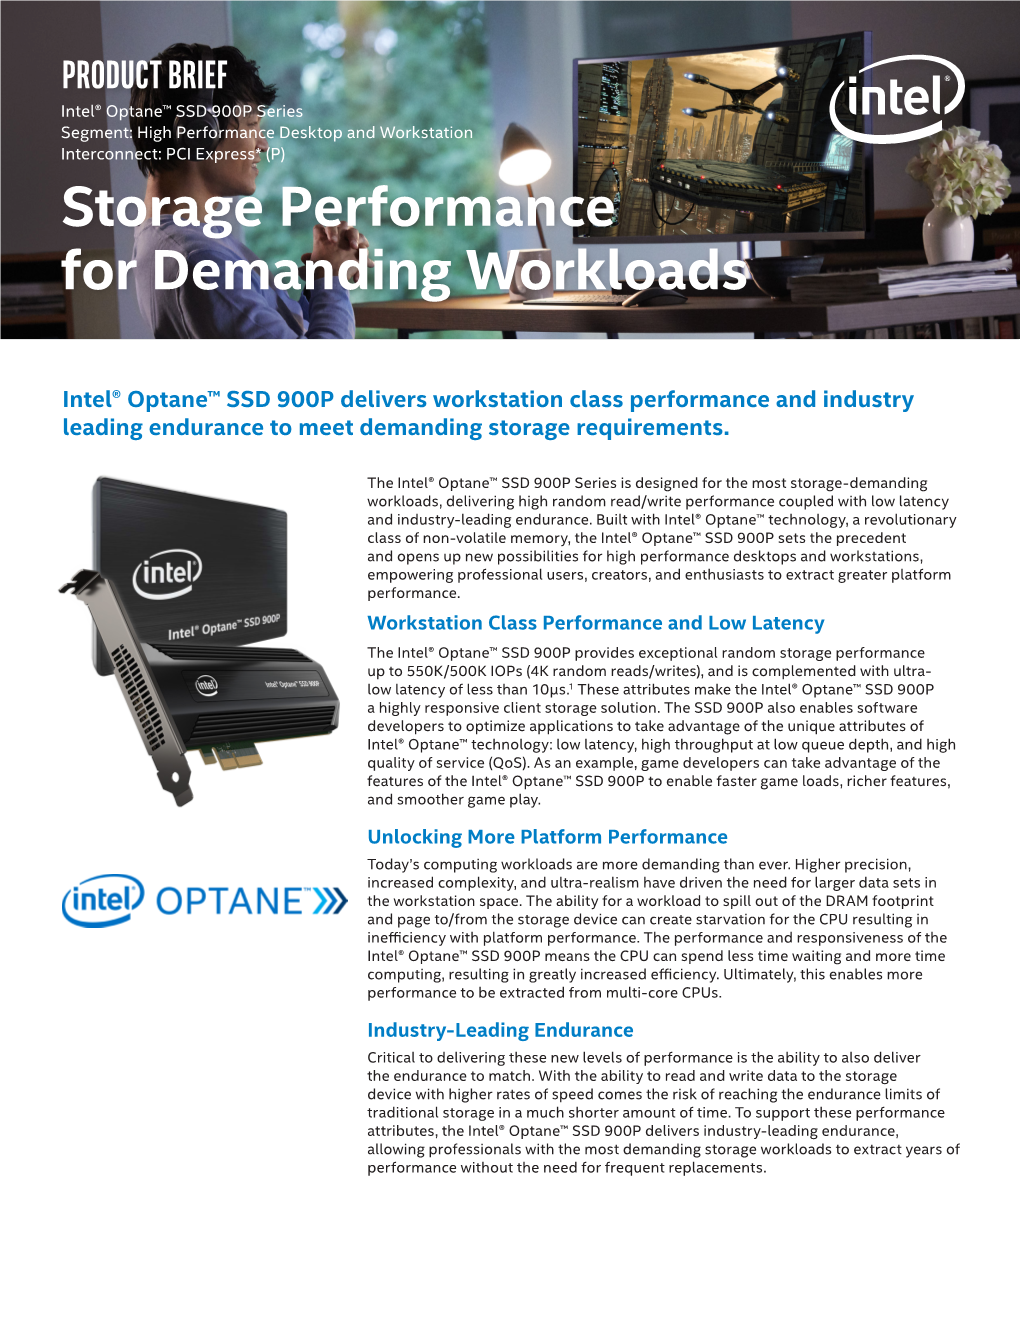 Storage Performance for Demanding Workloads